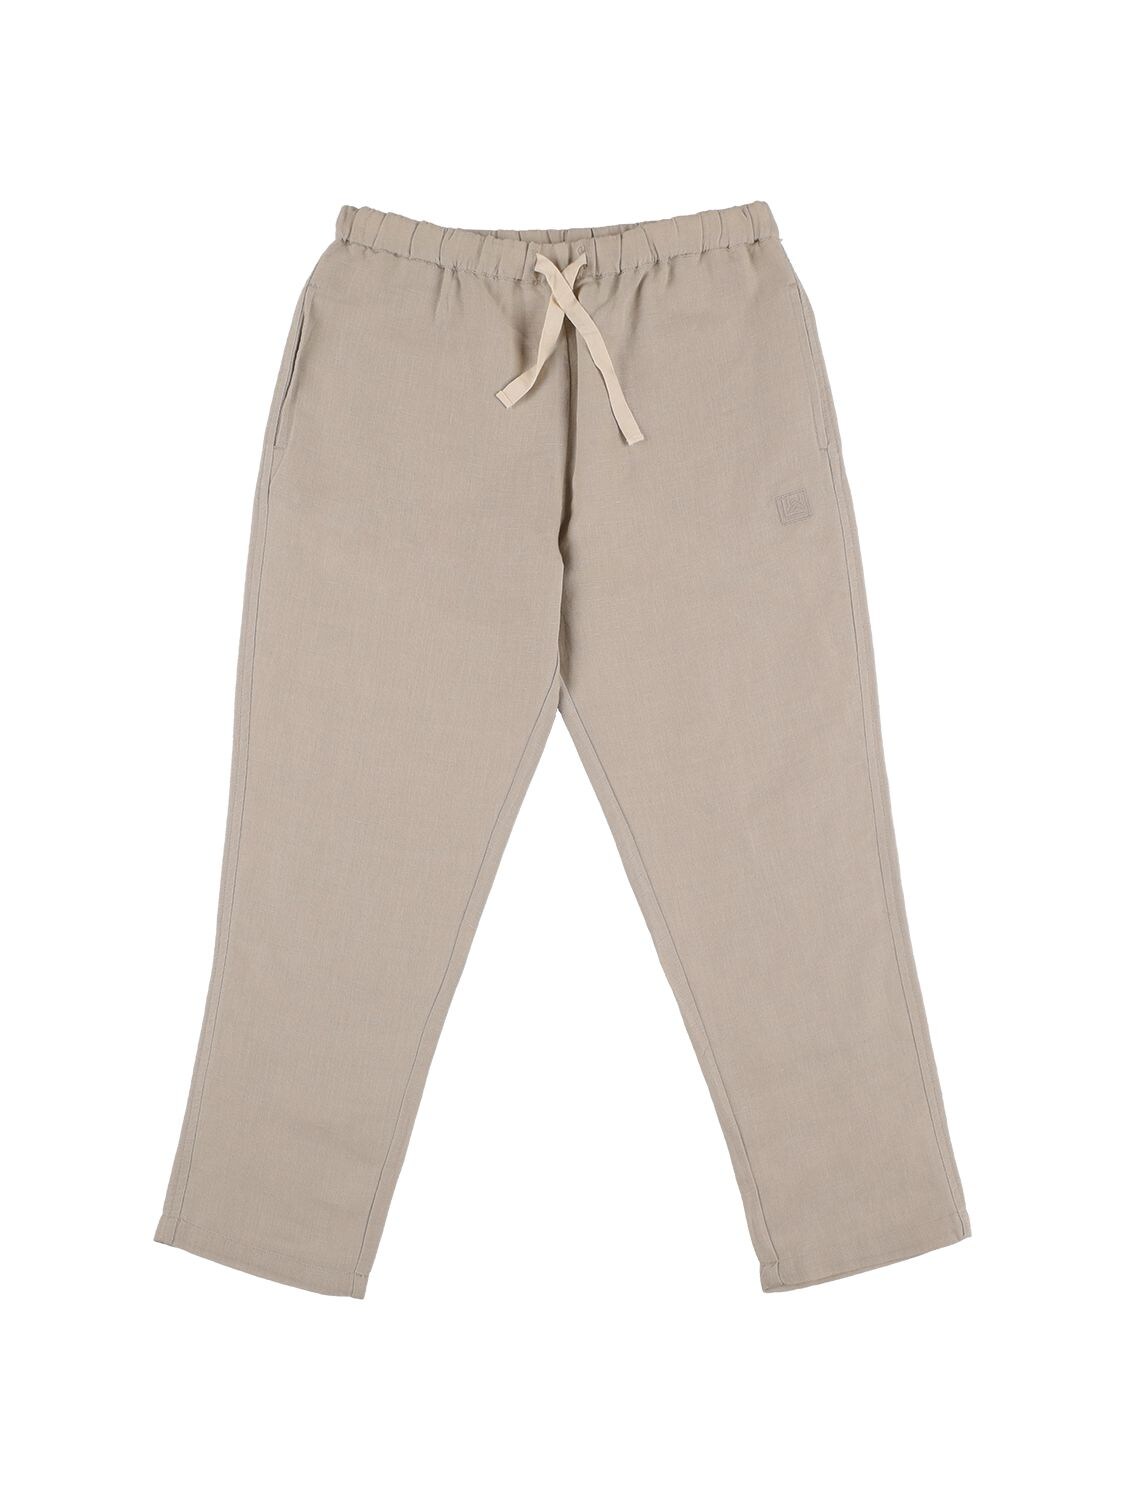 Liewood Kids' Organic Cotton & Linen Shorts In Brown